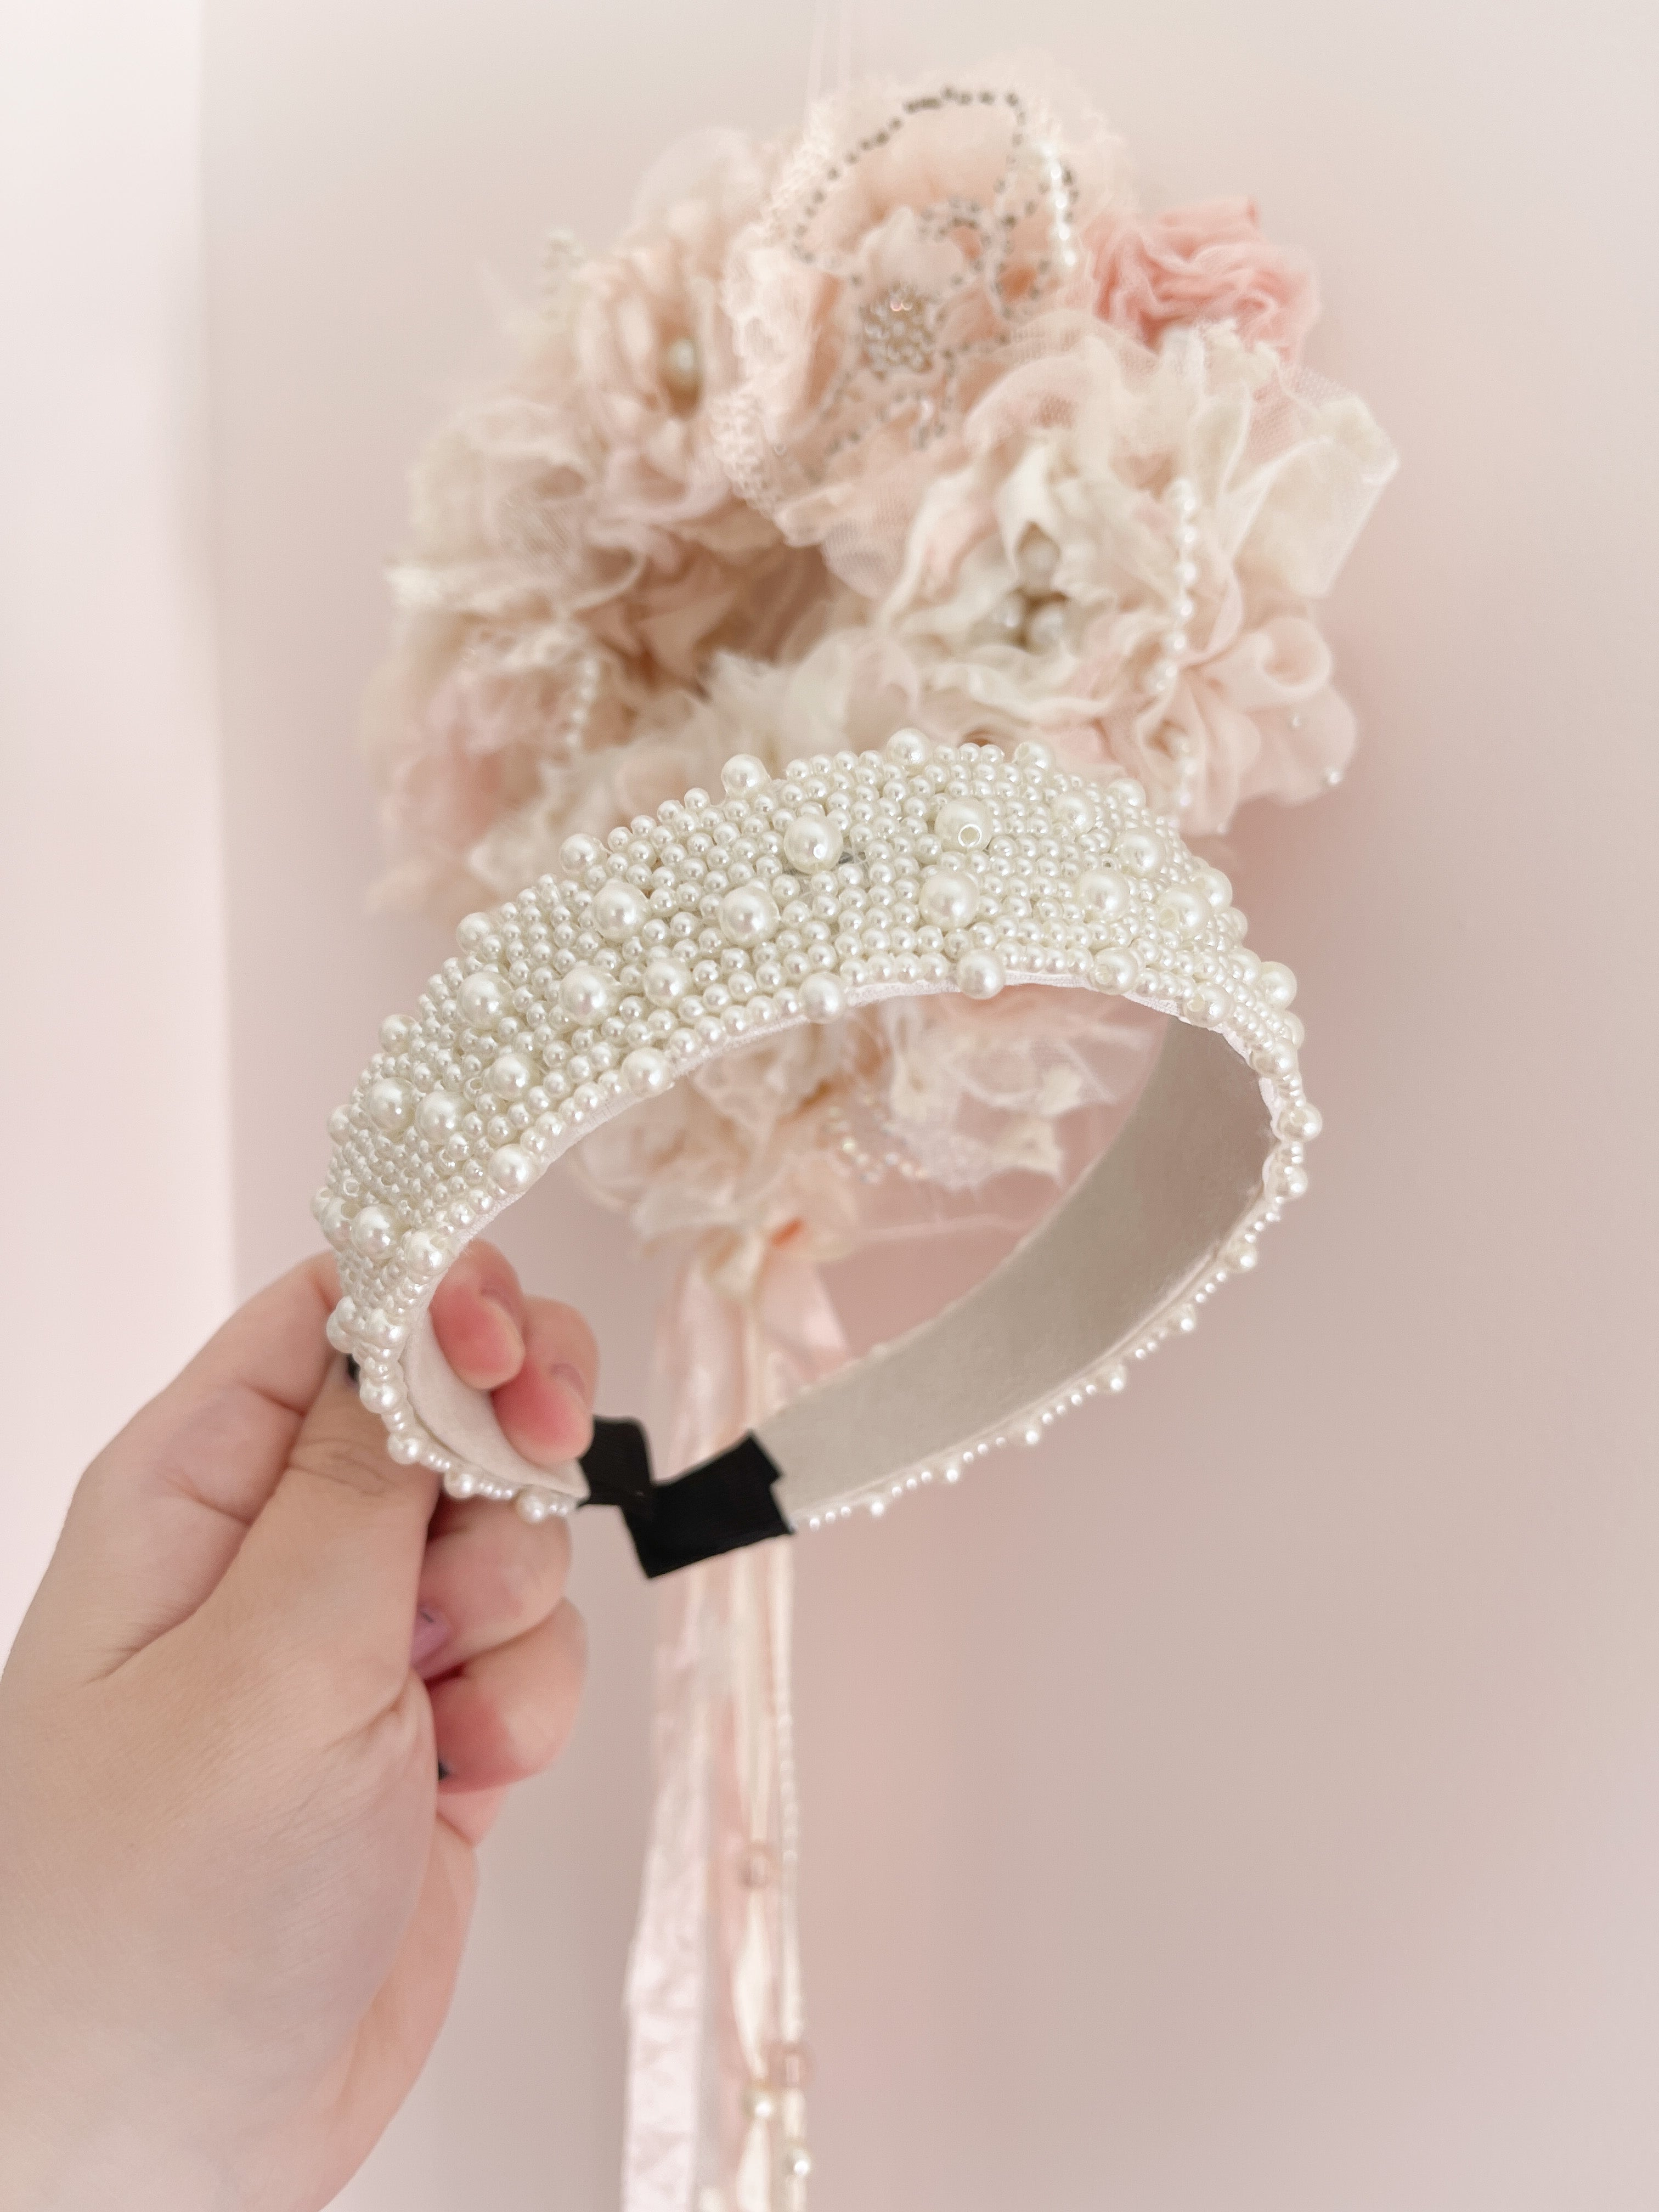 The "Ballerina Pearl” Headband